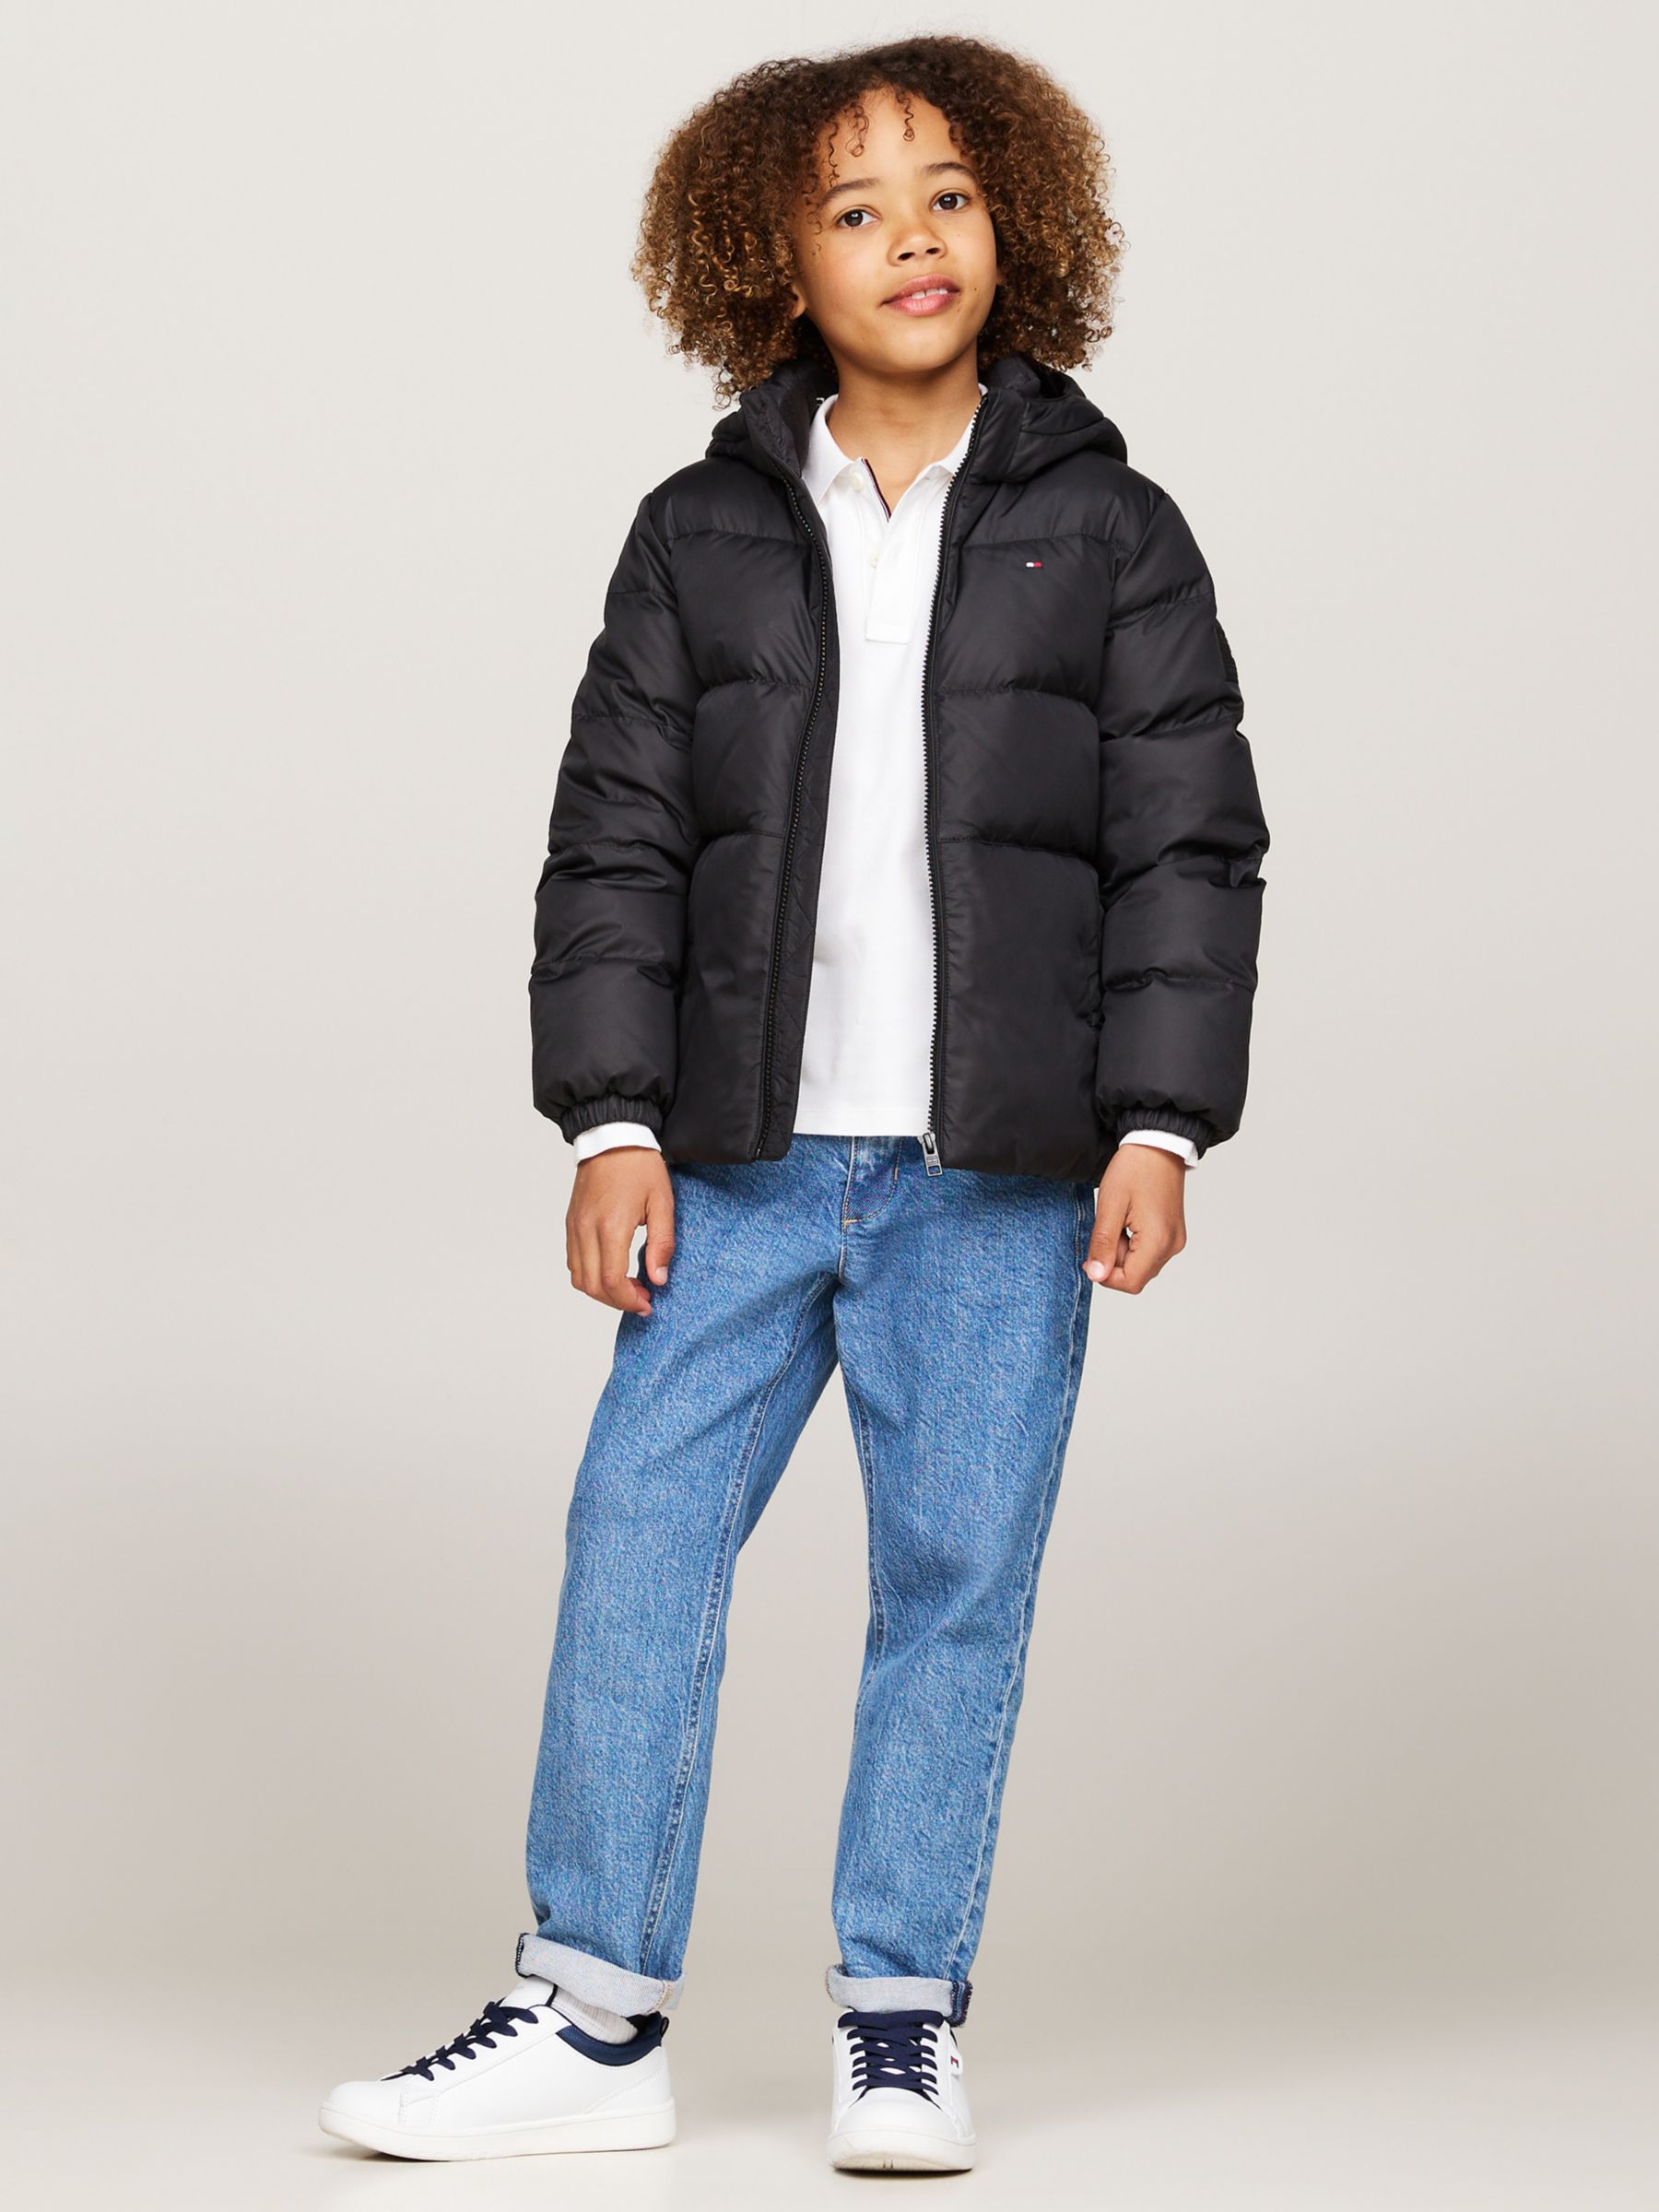 Buy Tommy Hilfiger Kids' Essential Down Puffer Jacket, Black Online at johnlewis.com